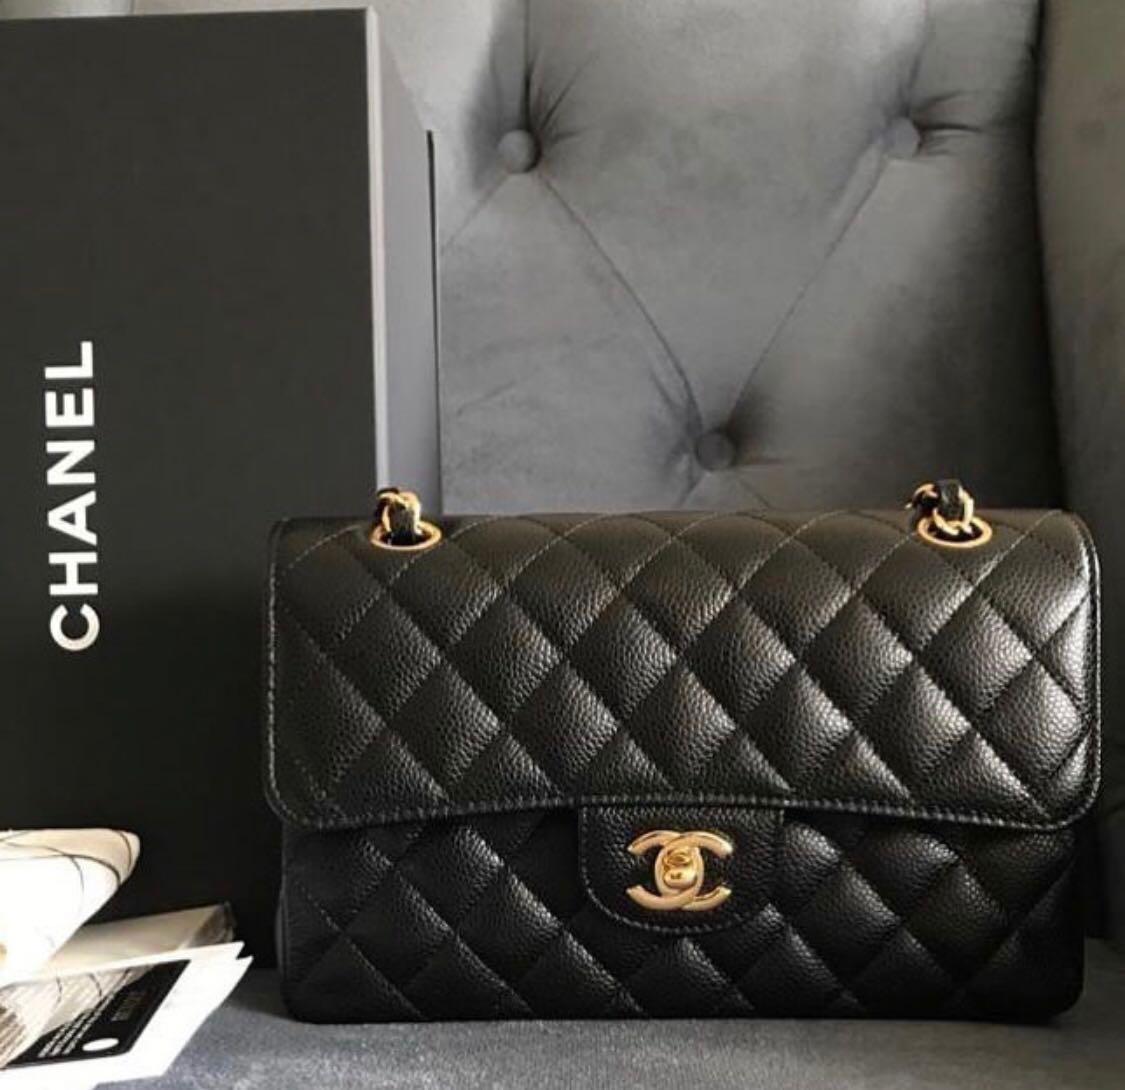 Large classic handbag Grained calfskin  goldtone metal black  Fashion   CHANEL